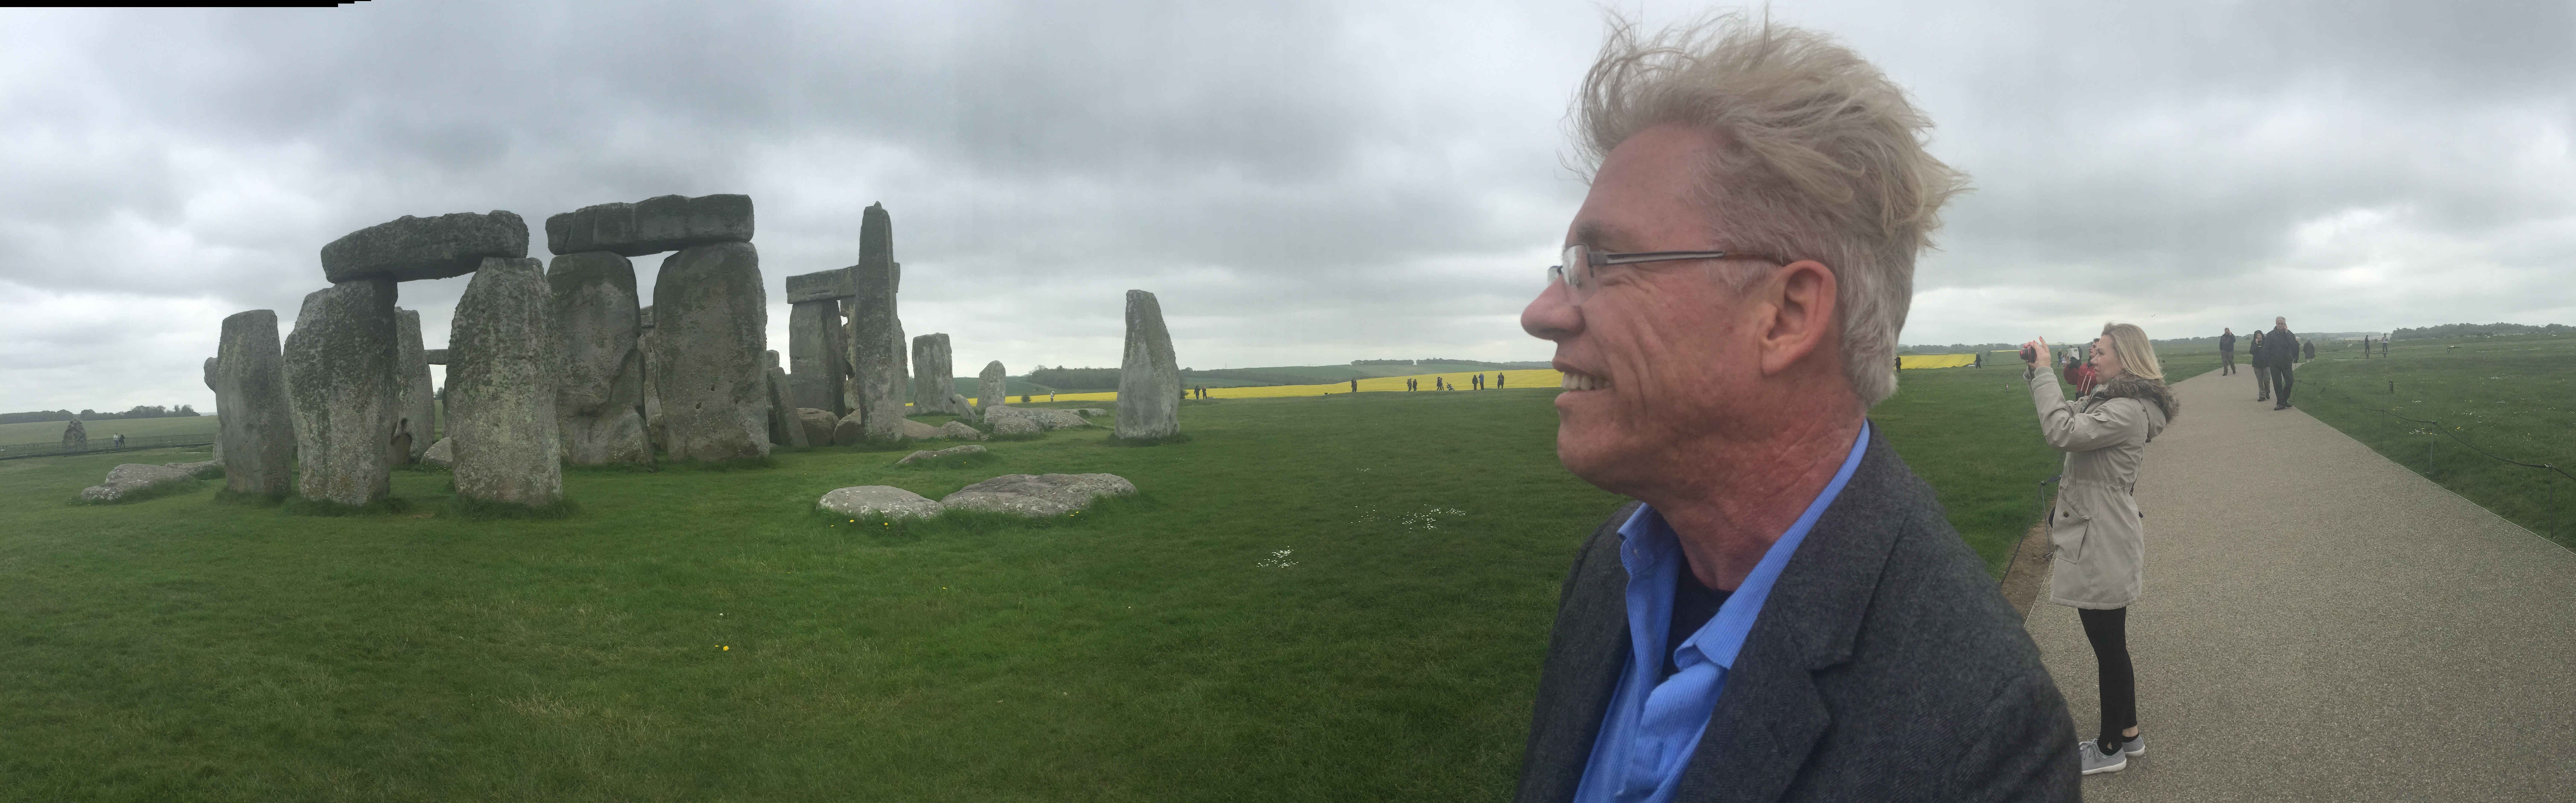 Michael Donahue location scouting at Stonehenge May 10 2015.